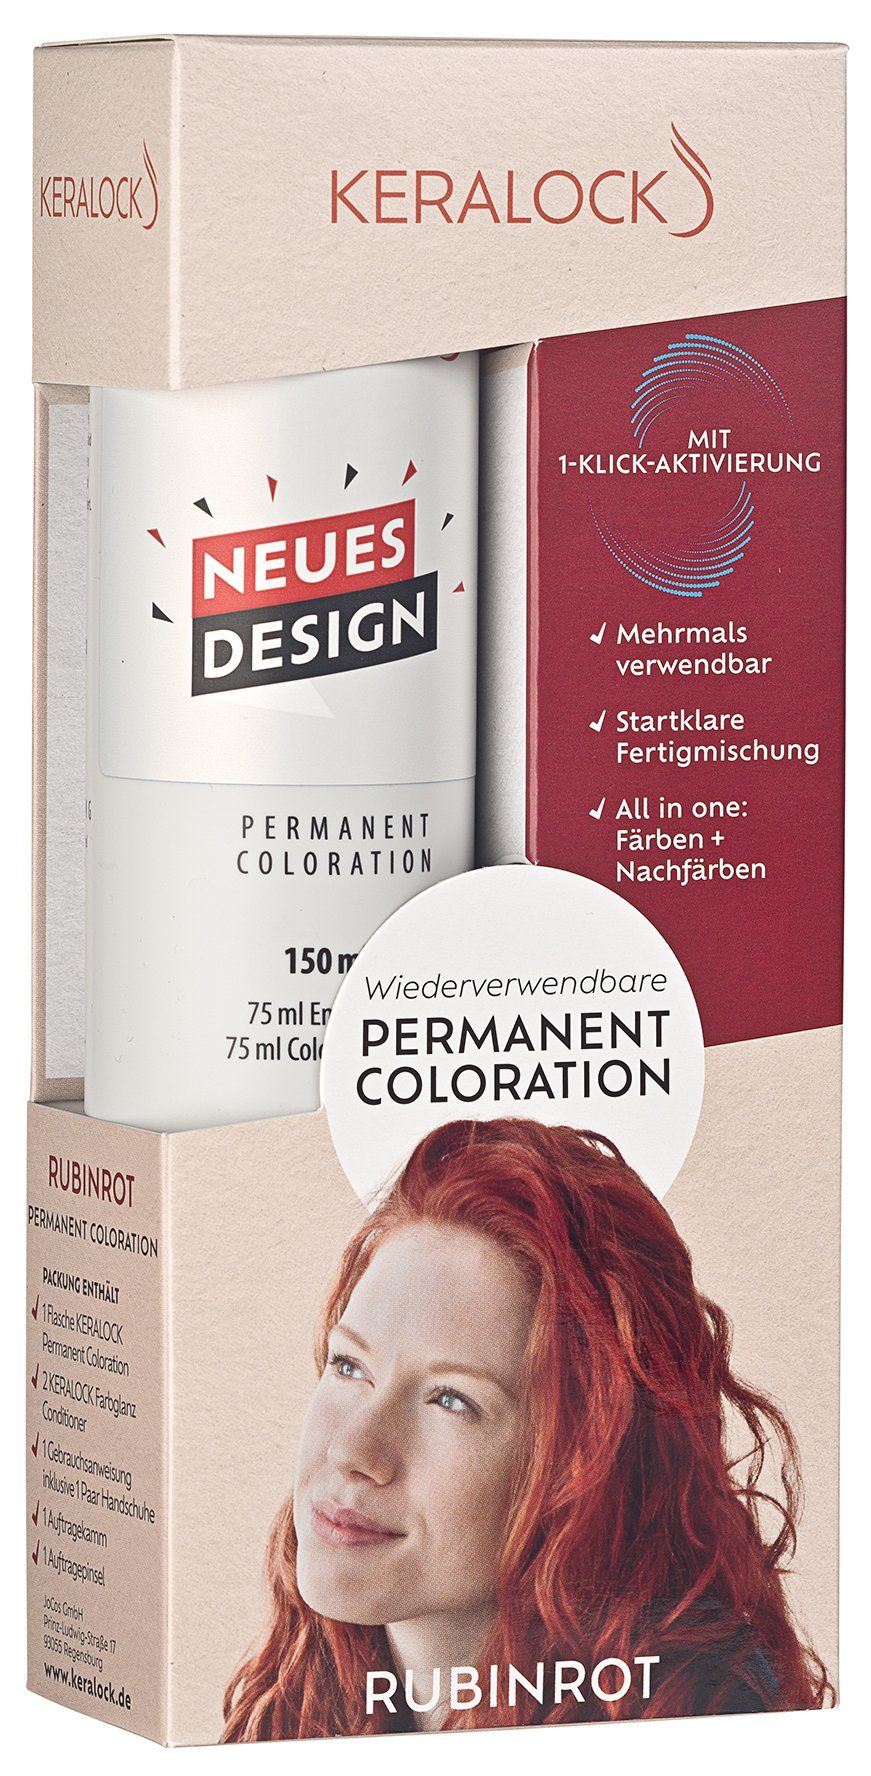 Keralock Coloration Wiederverwendbare Haarfarbe Rubinrot